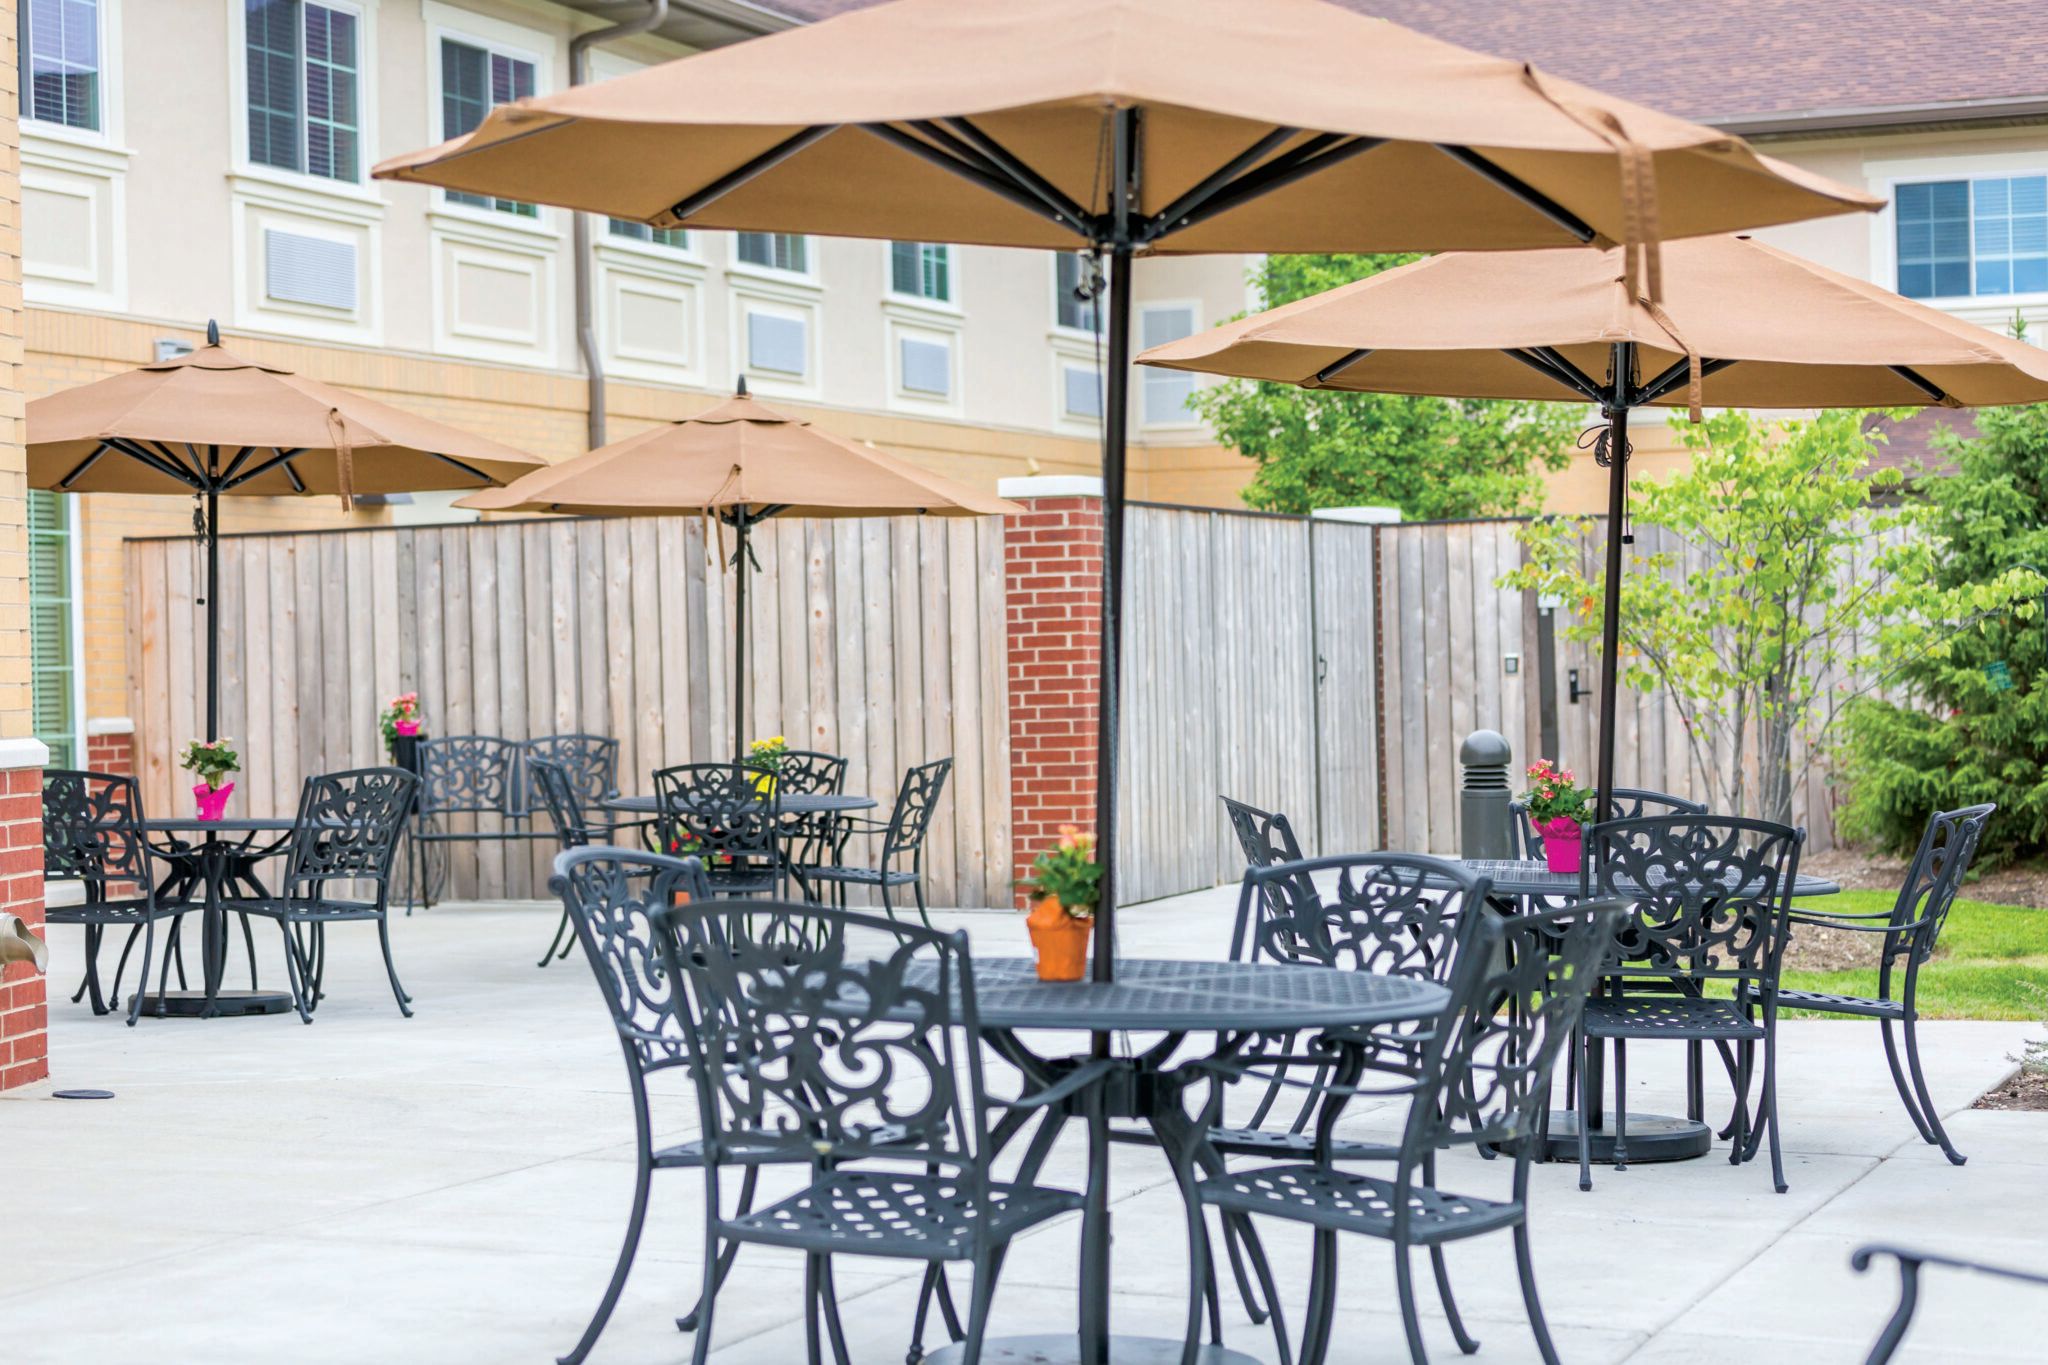 Senior residents enjoying patio dining at Cedar Lake Assisted Living and Memory Care facility.